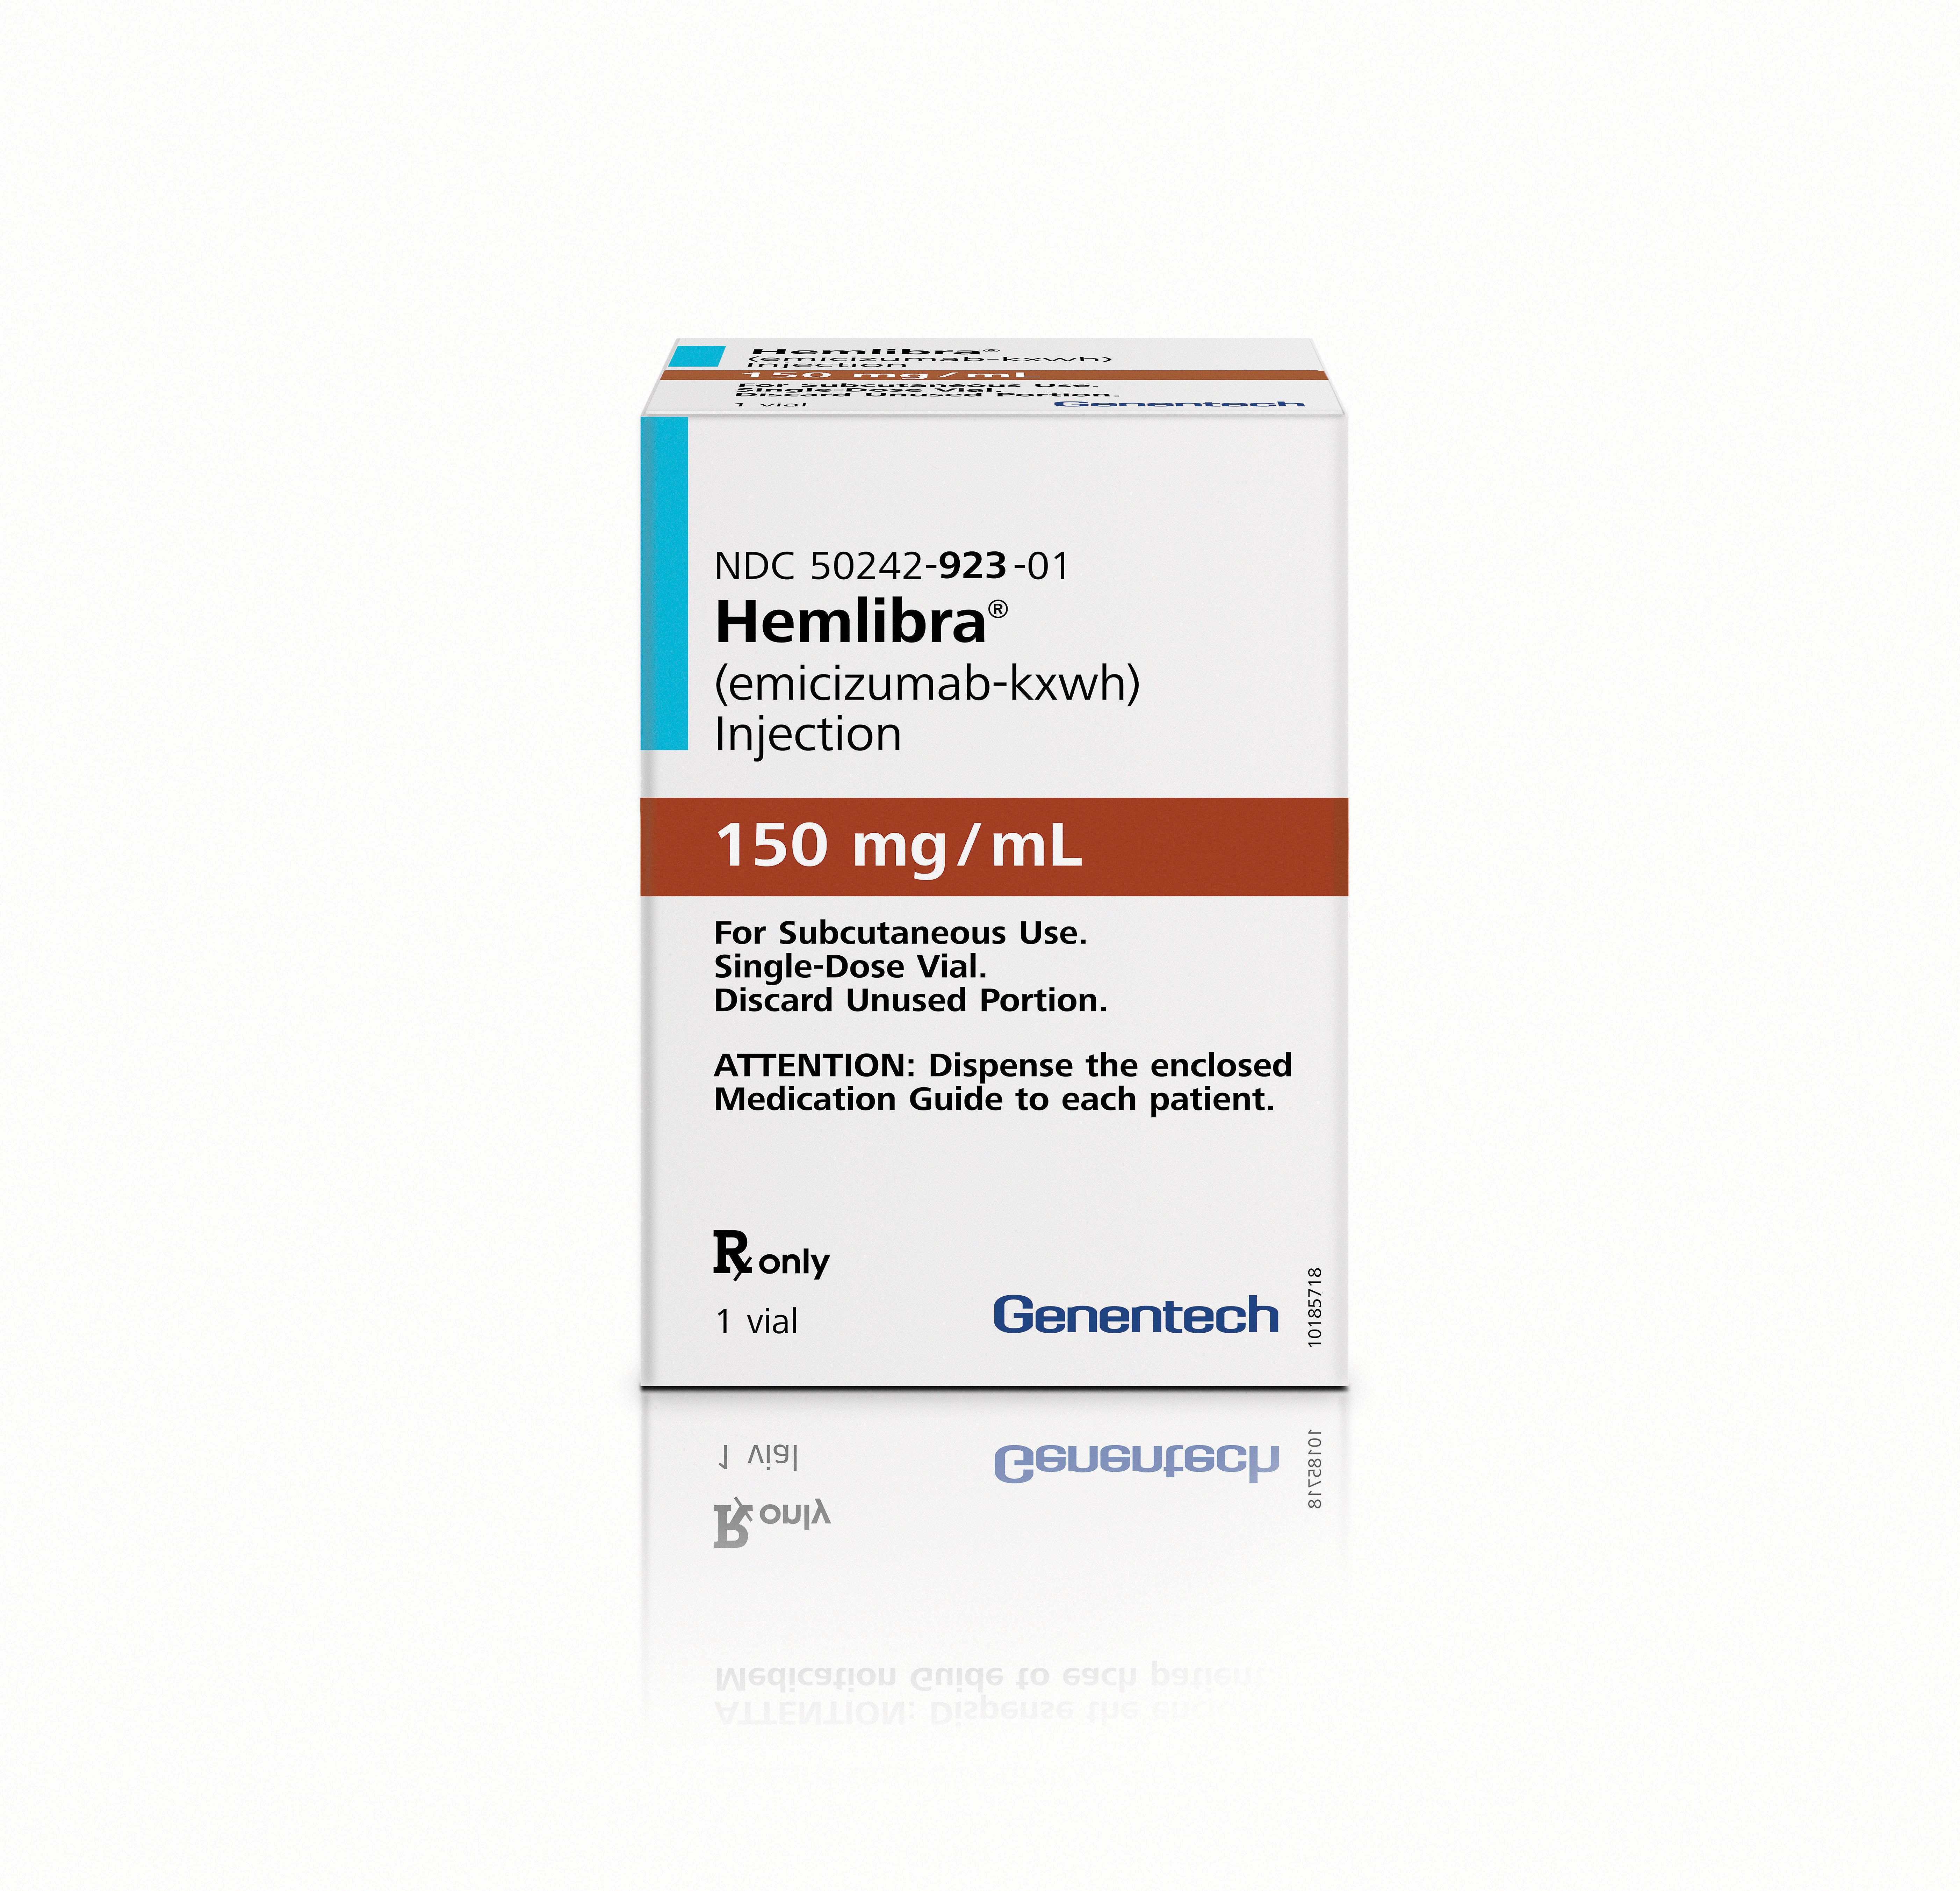 Factor VIII inhibitors in hemophilia A treated with emicizumab